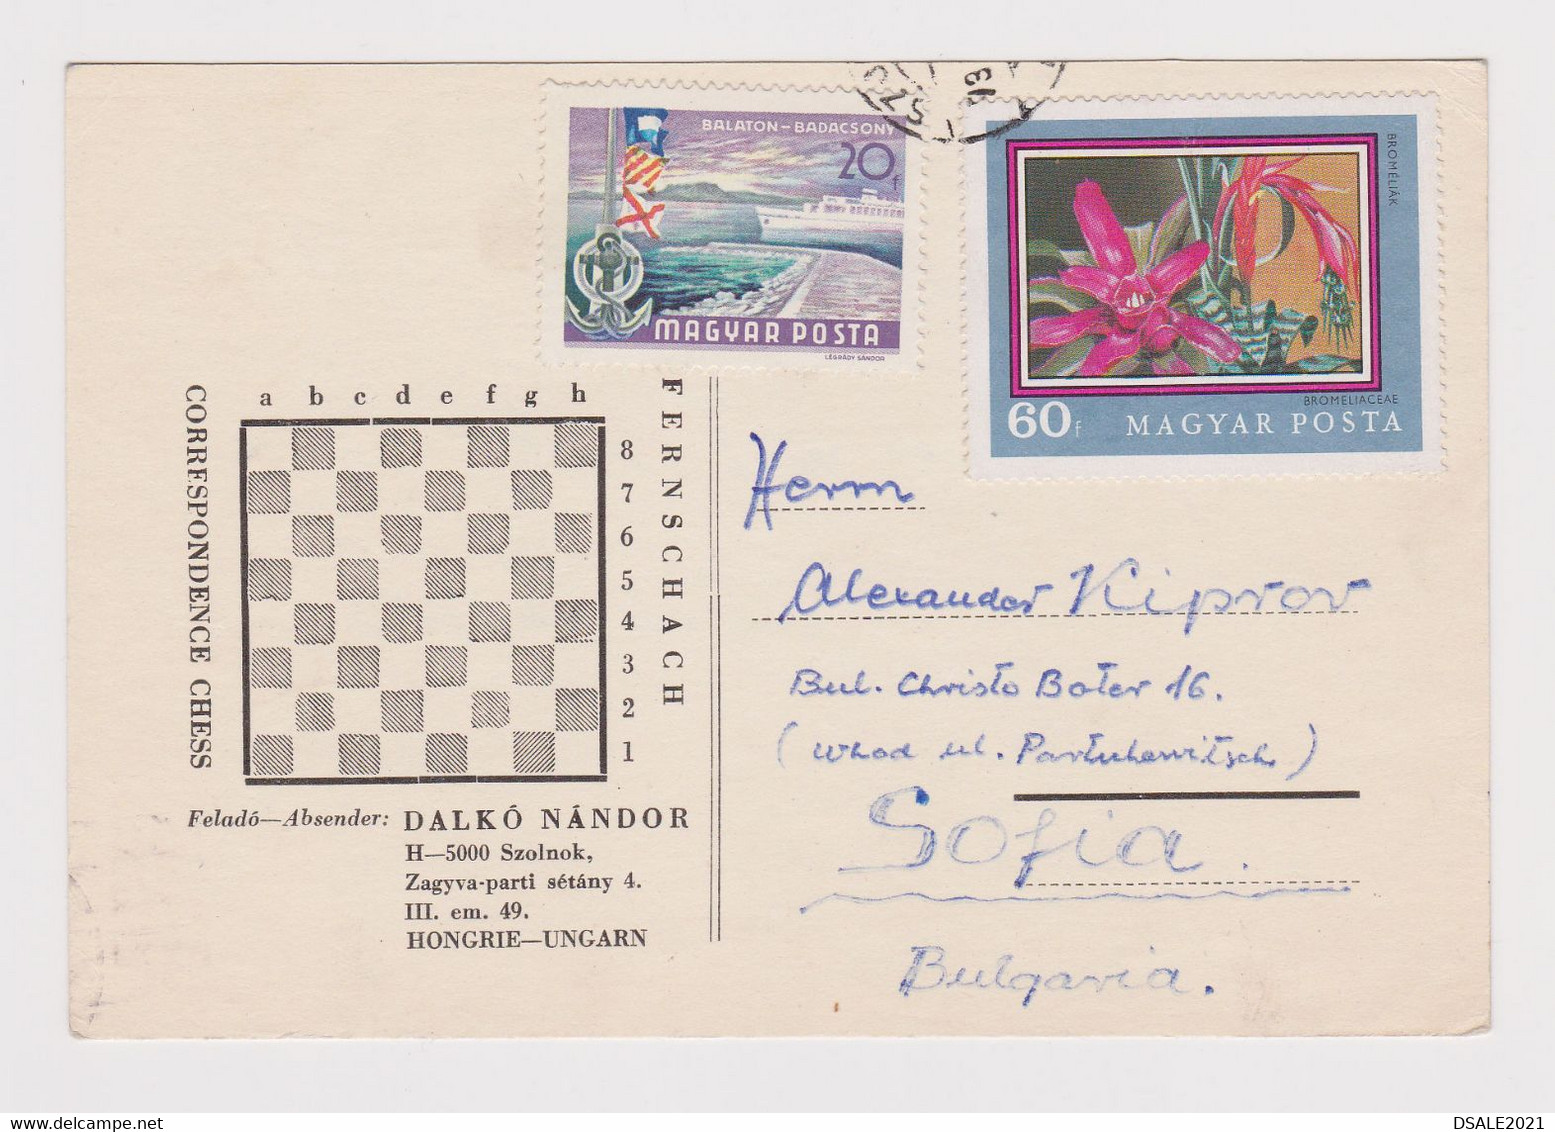 Hungary Ungarn Ungheria Hongrie 1973 Chess Card W/Topic Stamps Lake Balaton, Flower (Bromeliad) Sent To Bulgaria /39640 - Storia Postale